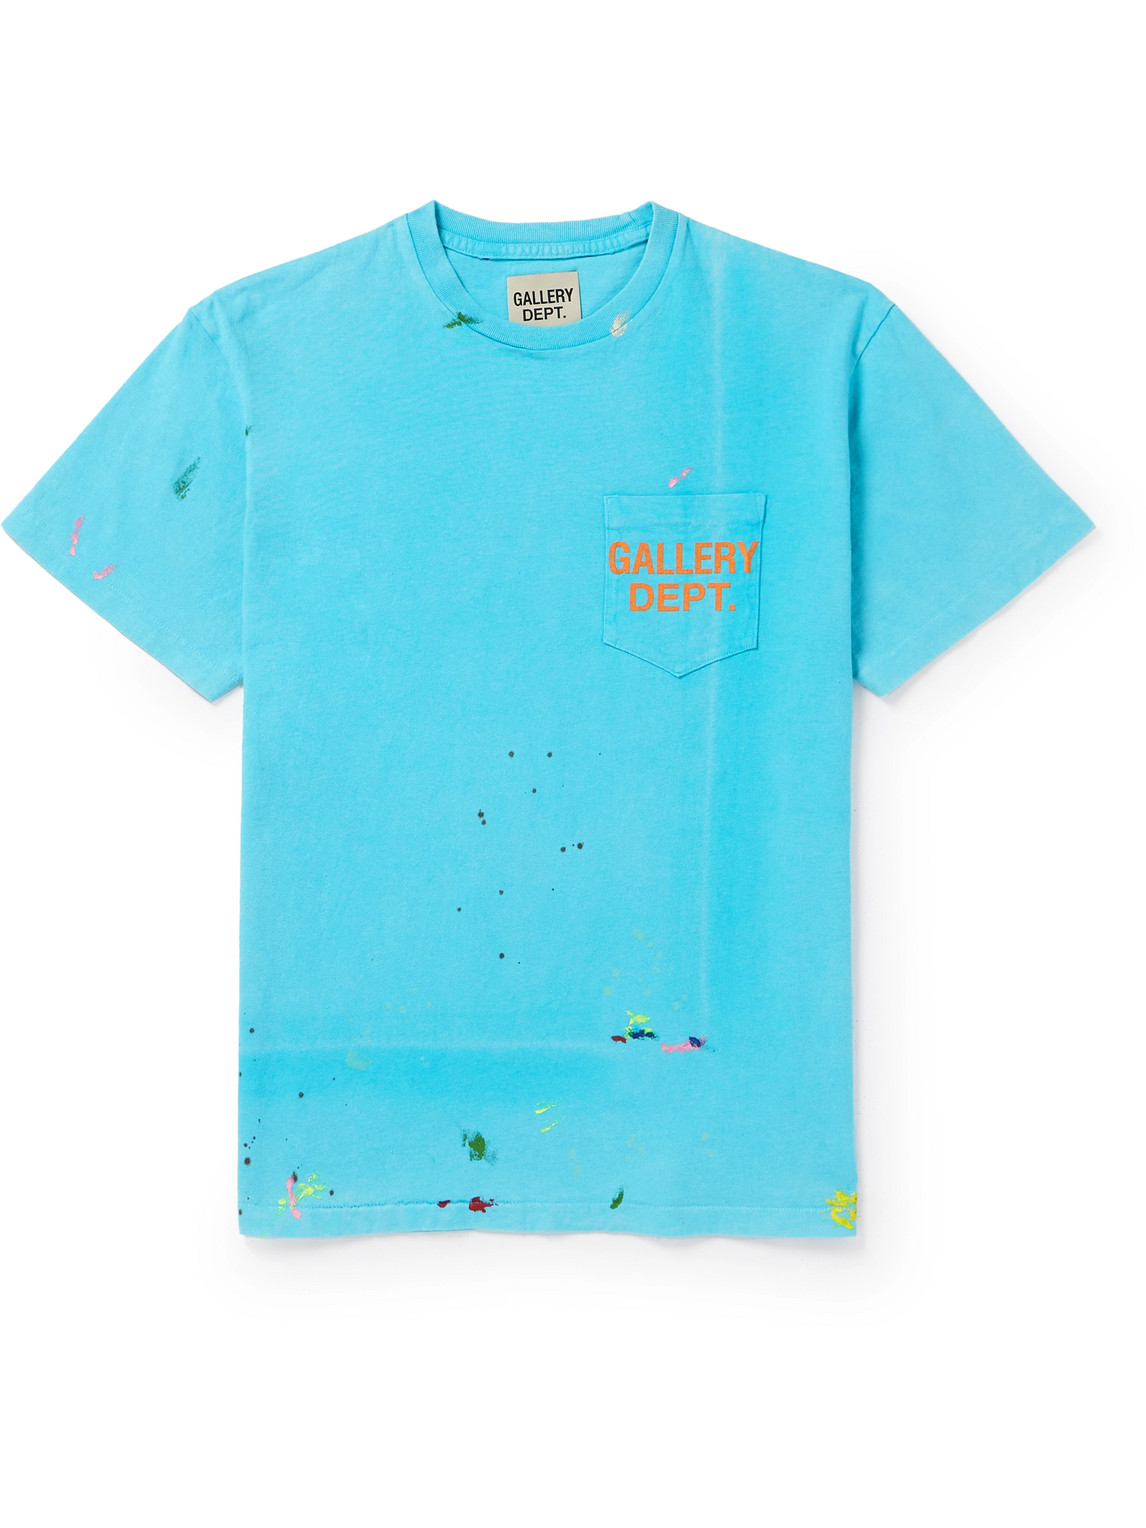 Gallery Dept. - Vintage Logo-Print Paint-Splattered Cotton-Jersey T-Shirt - Men - Blue - L von Gallery Dept.